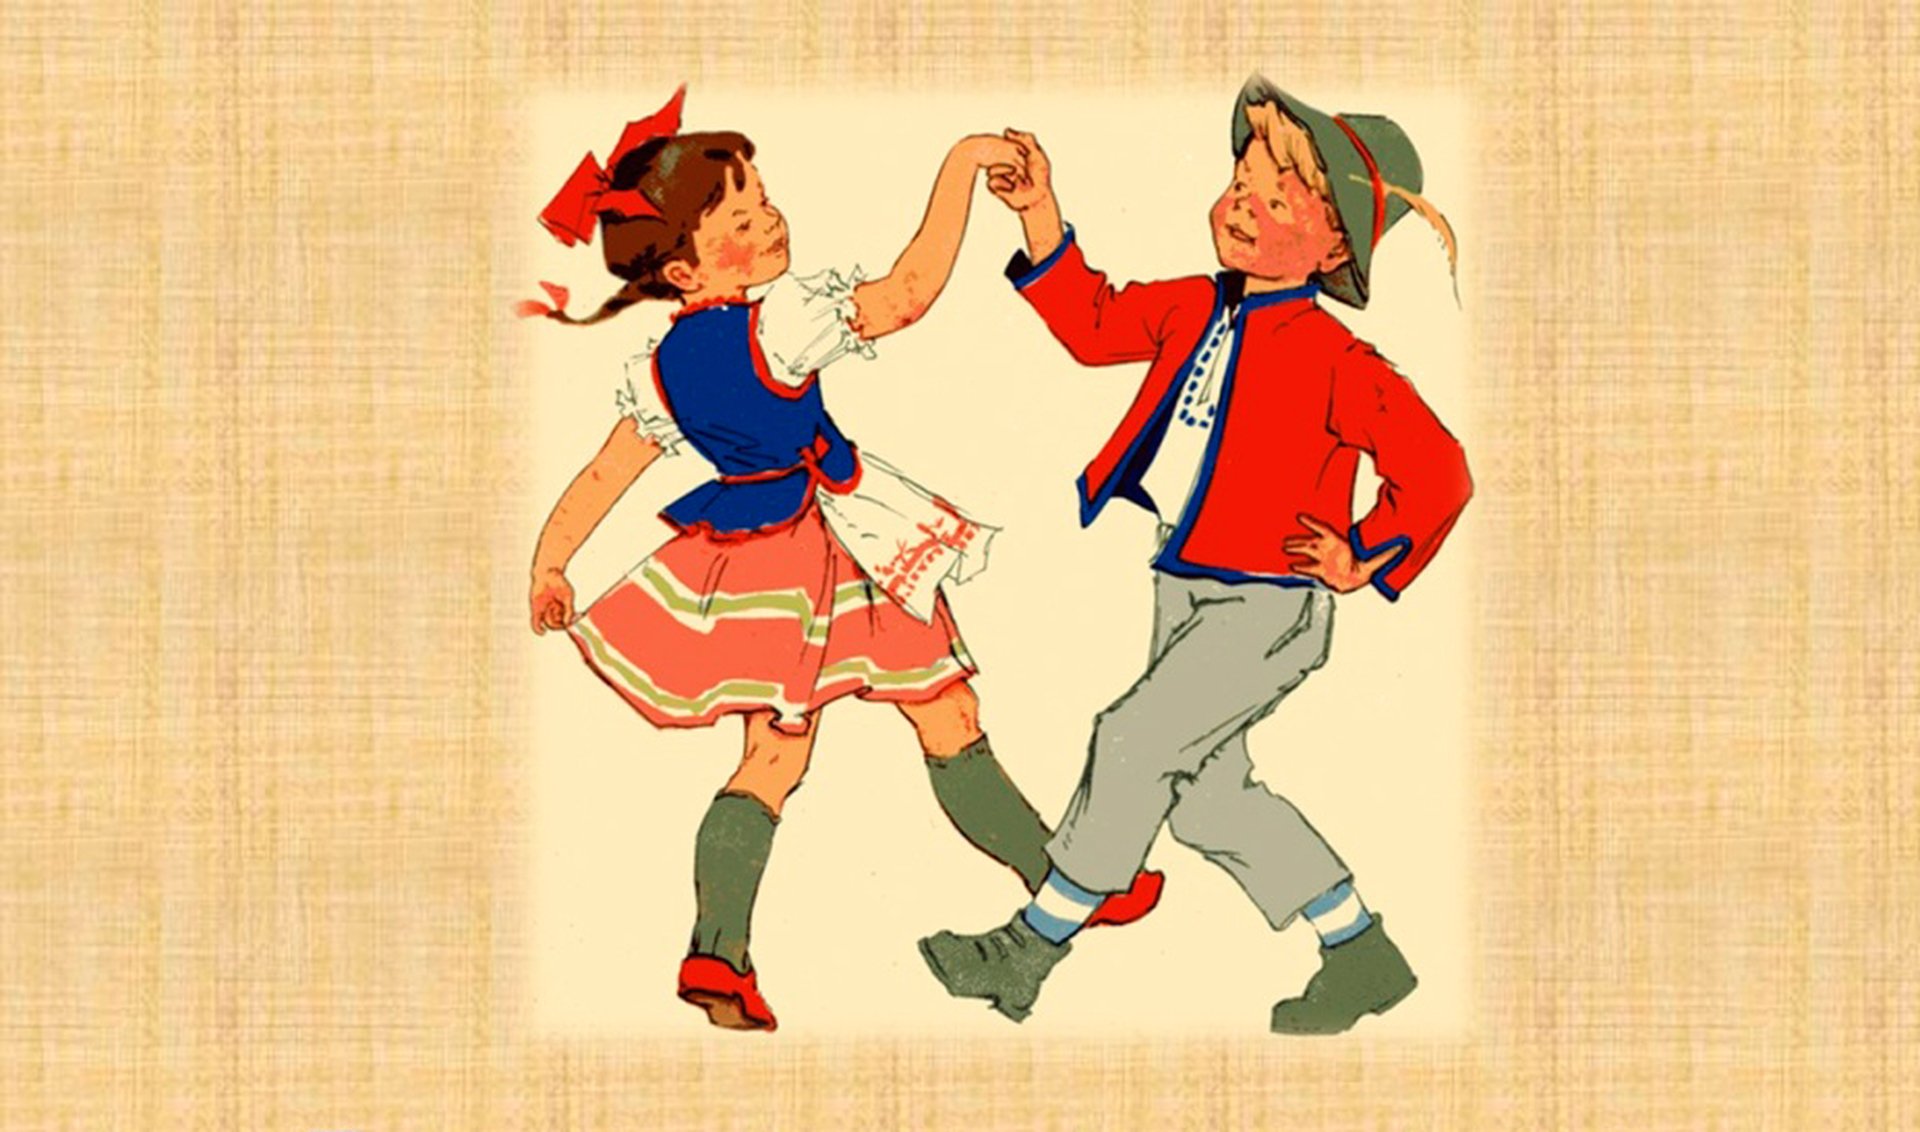 Про плясать. Полька танец. Танец полька для детей. Полька для детей в детском саду. Танец полька картинки.